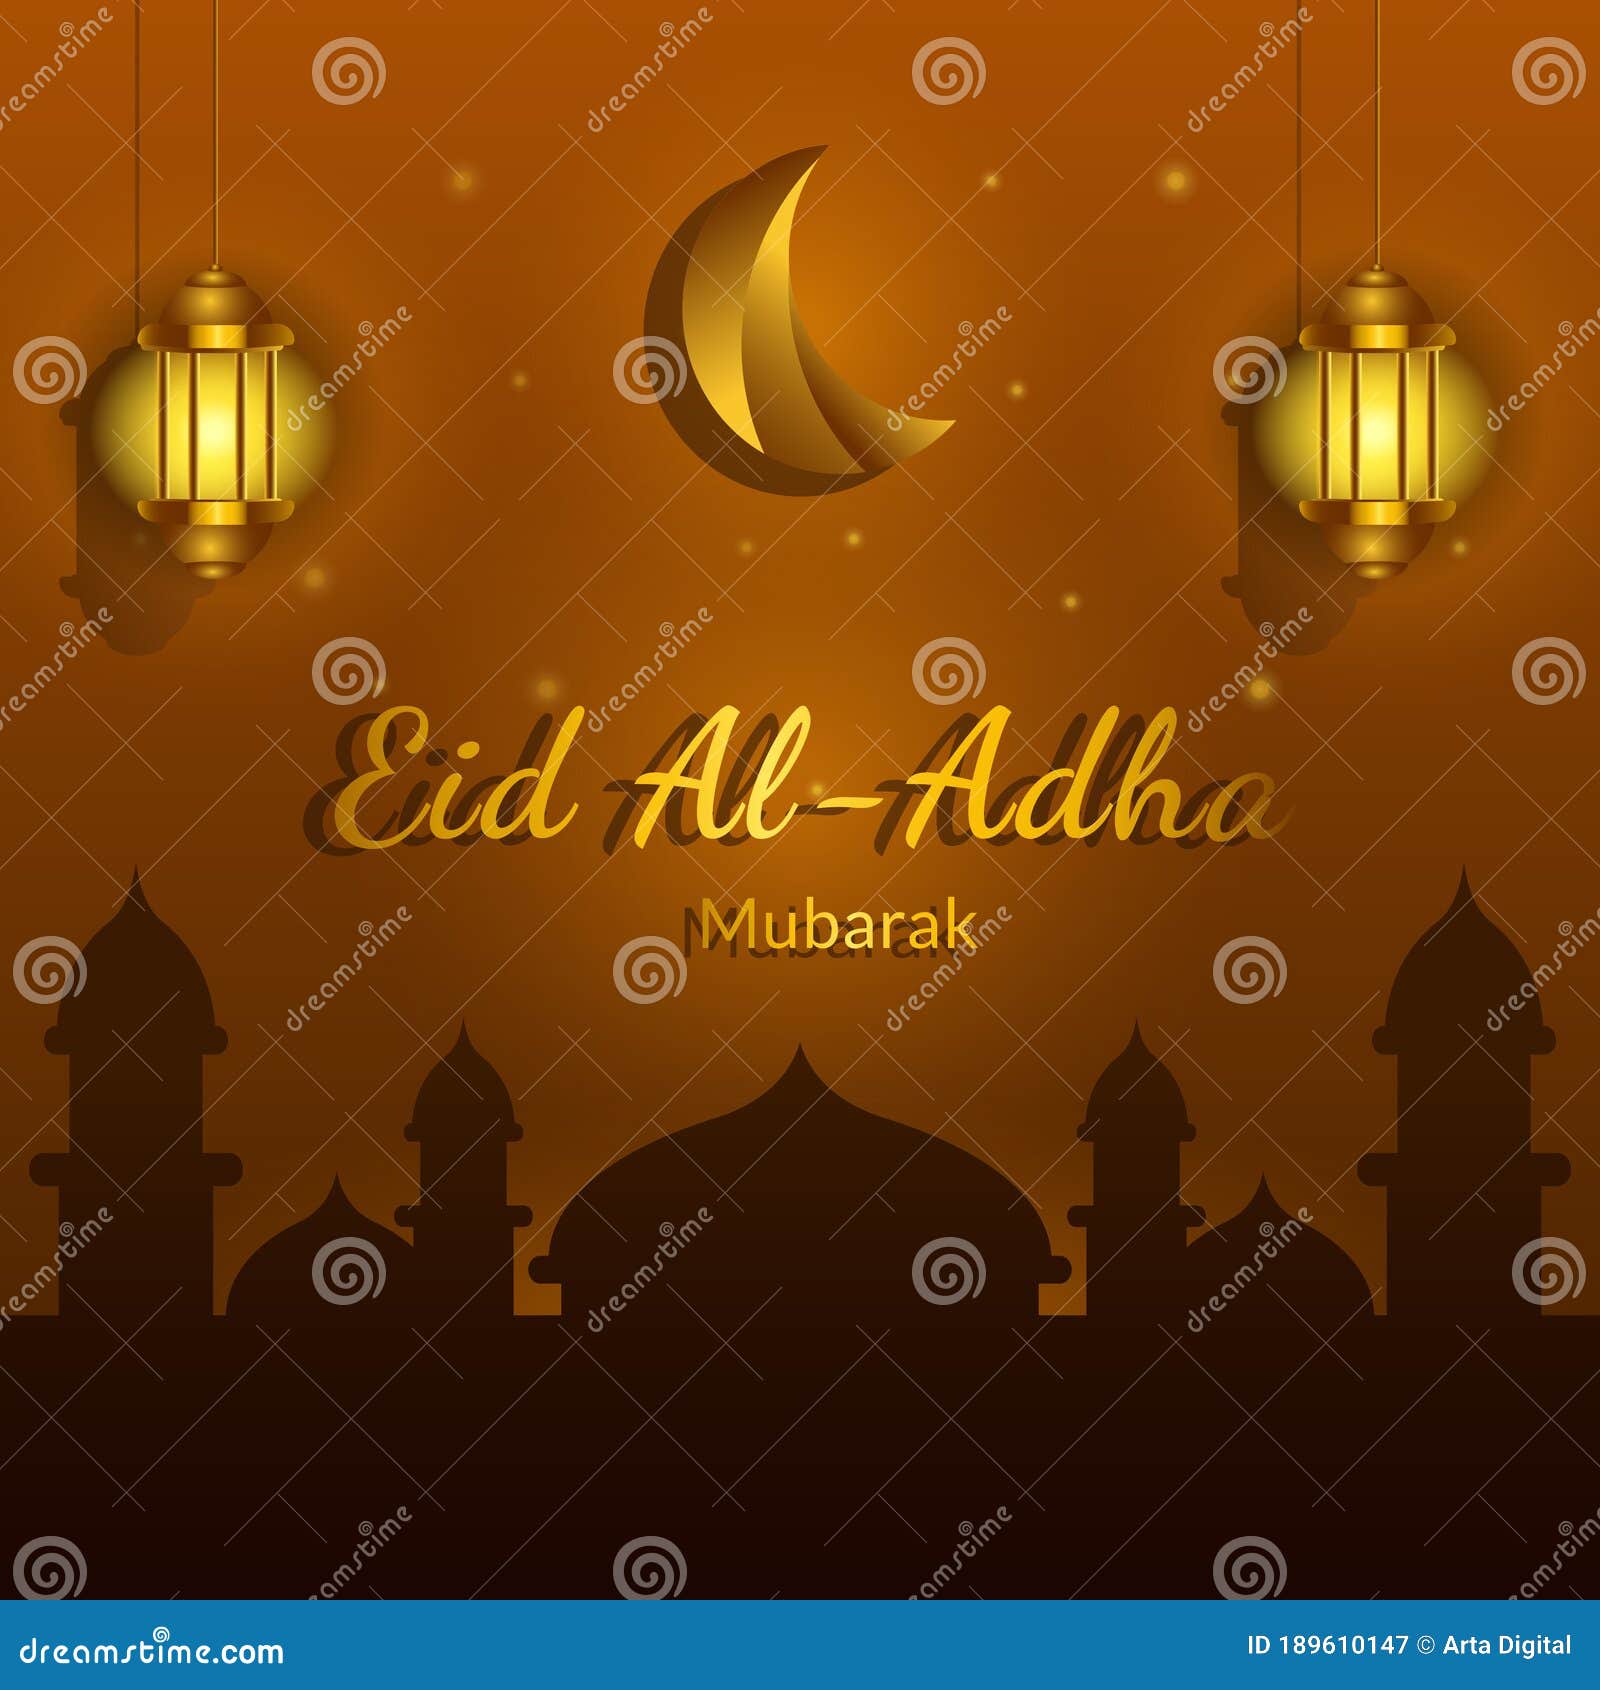 Eid Al Adha Mubarak Background, Eid Al Adha Flyer Design. Islamic Concept  for Happy Edi Al Adha Stock Vector - Illustration of animal, floral:  189610147